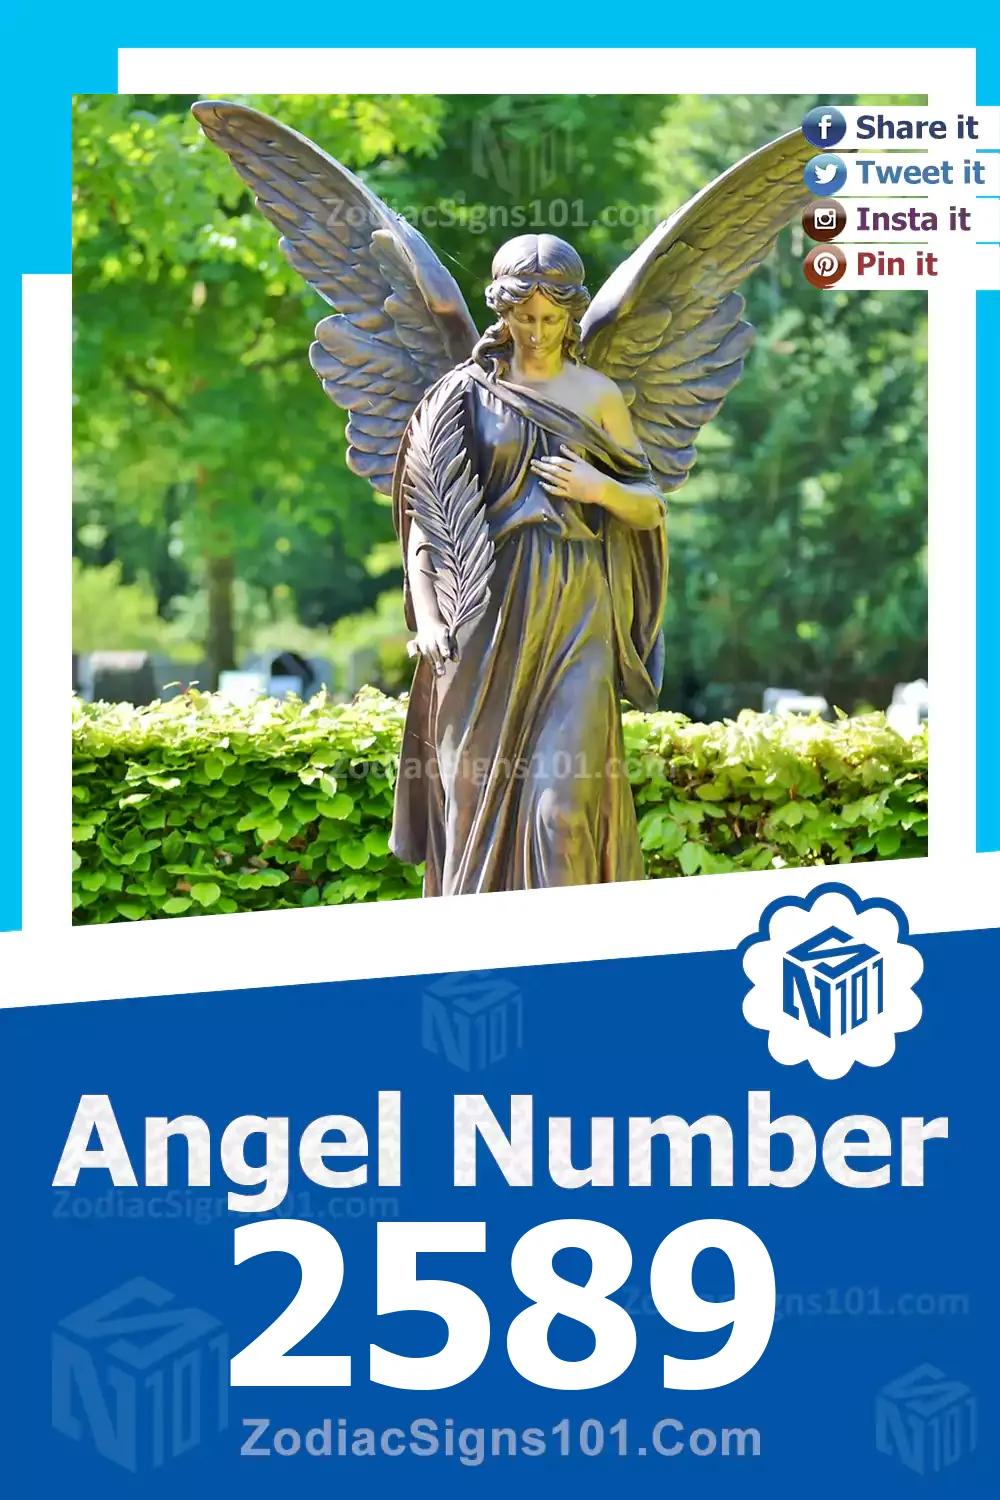 2589-Angel-Number-Meaning.jpg